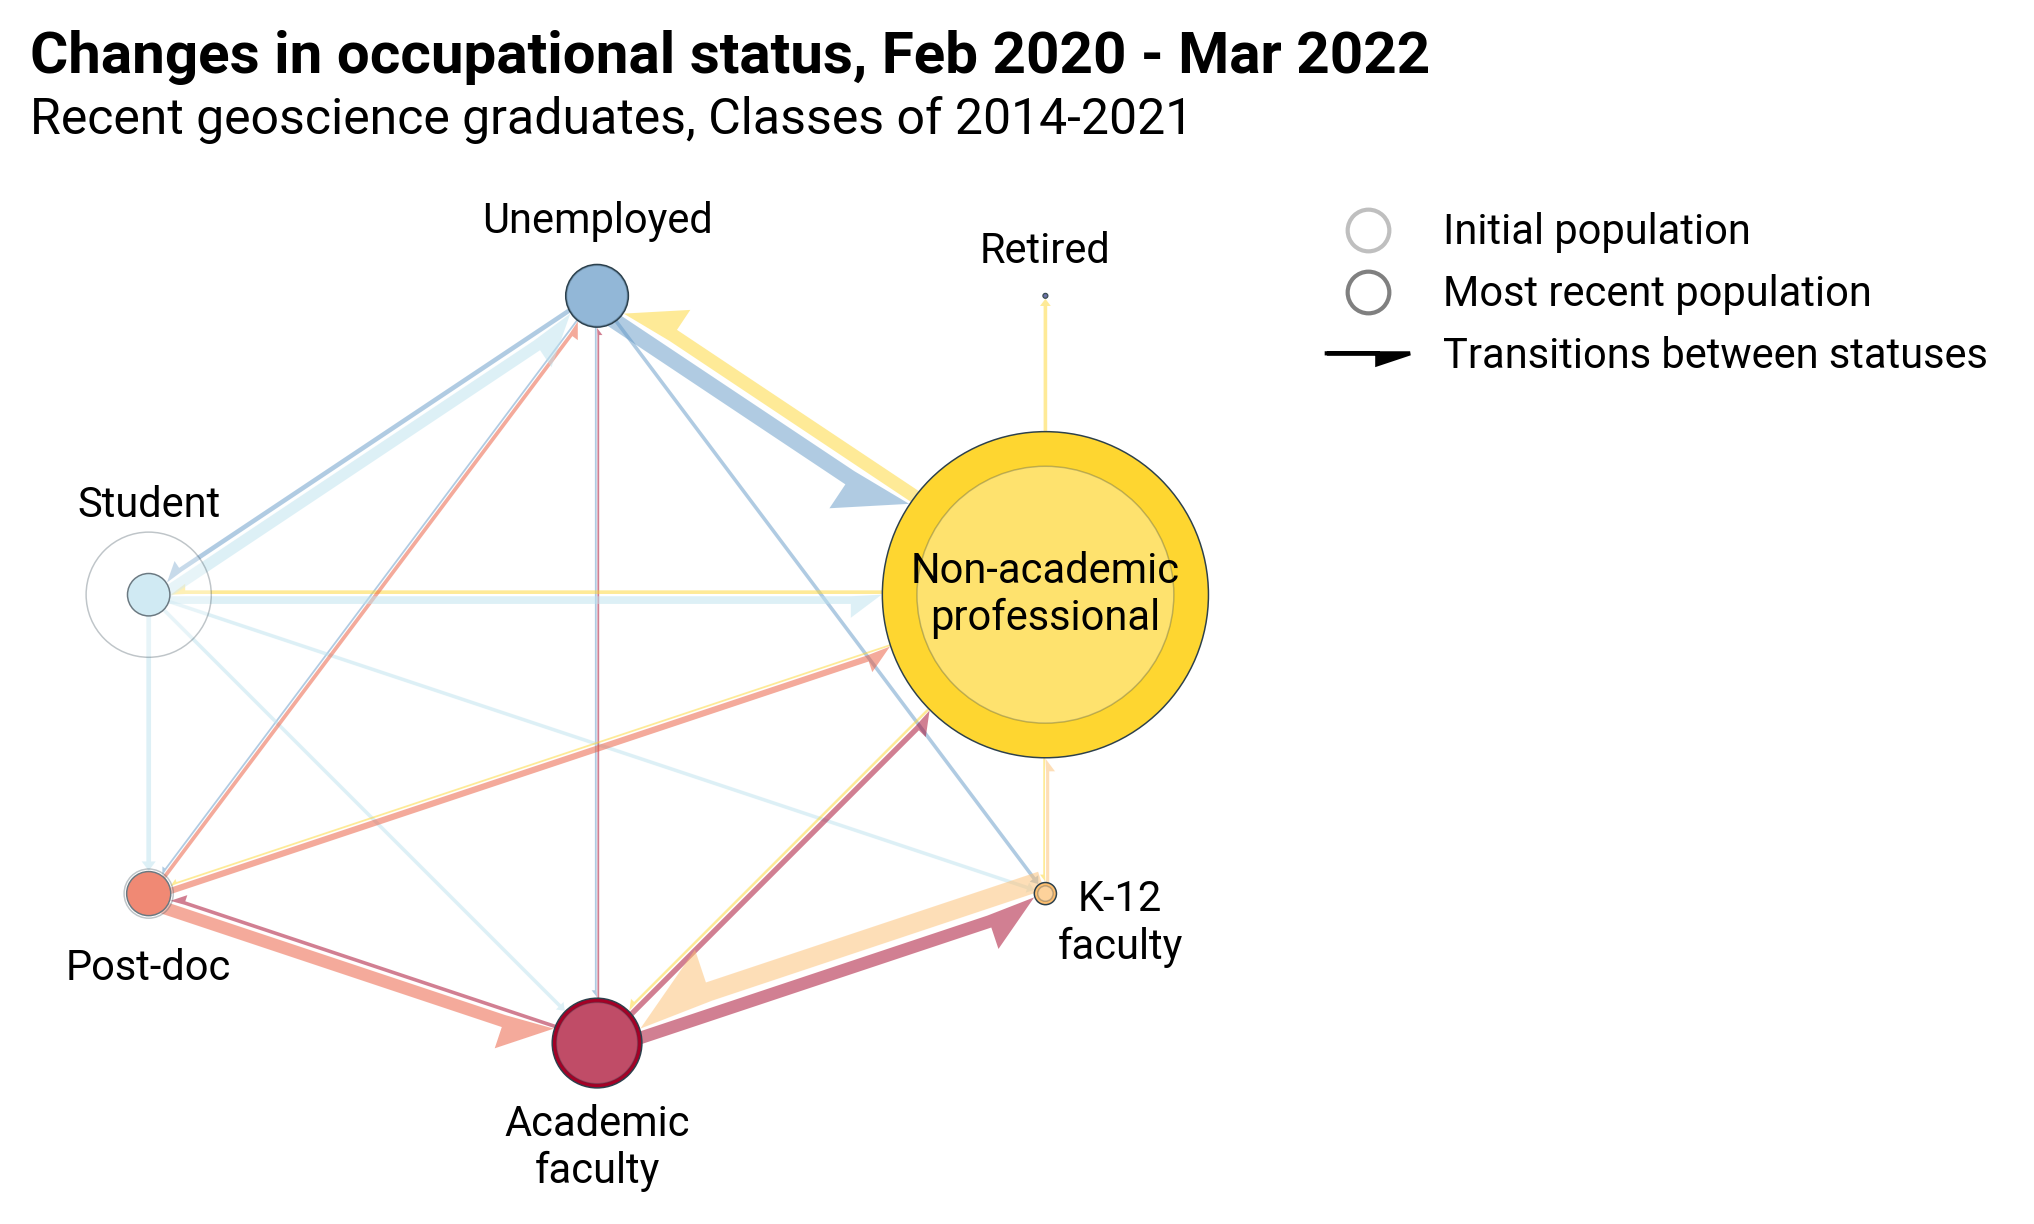 Changes in occupational status, Feb 2020 - Mar 2022; Recent geoscience graduates, Classes of 2014-2021 (Credit: AGI; data from AGI's Geoscience COVID-19 Survey)